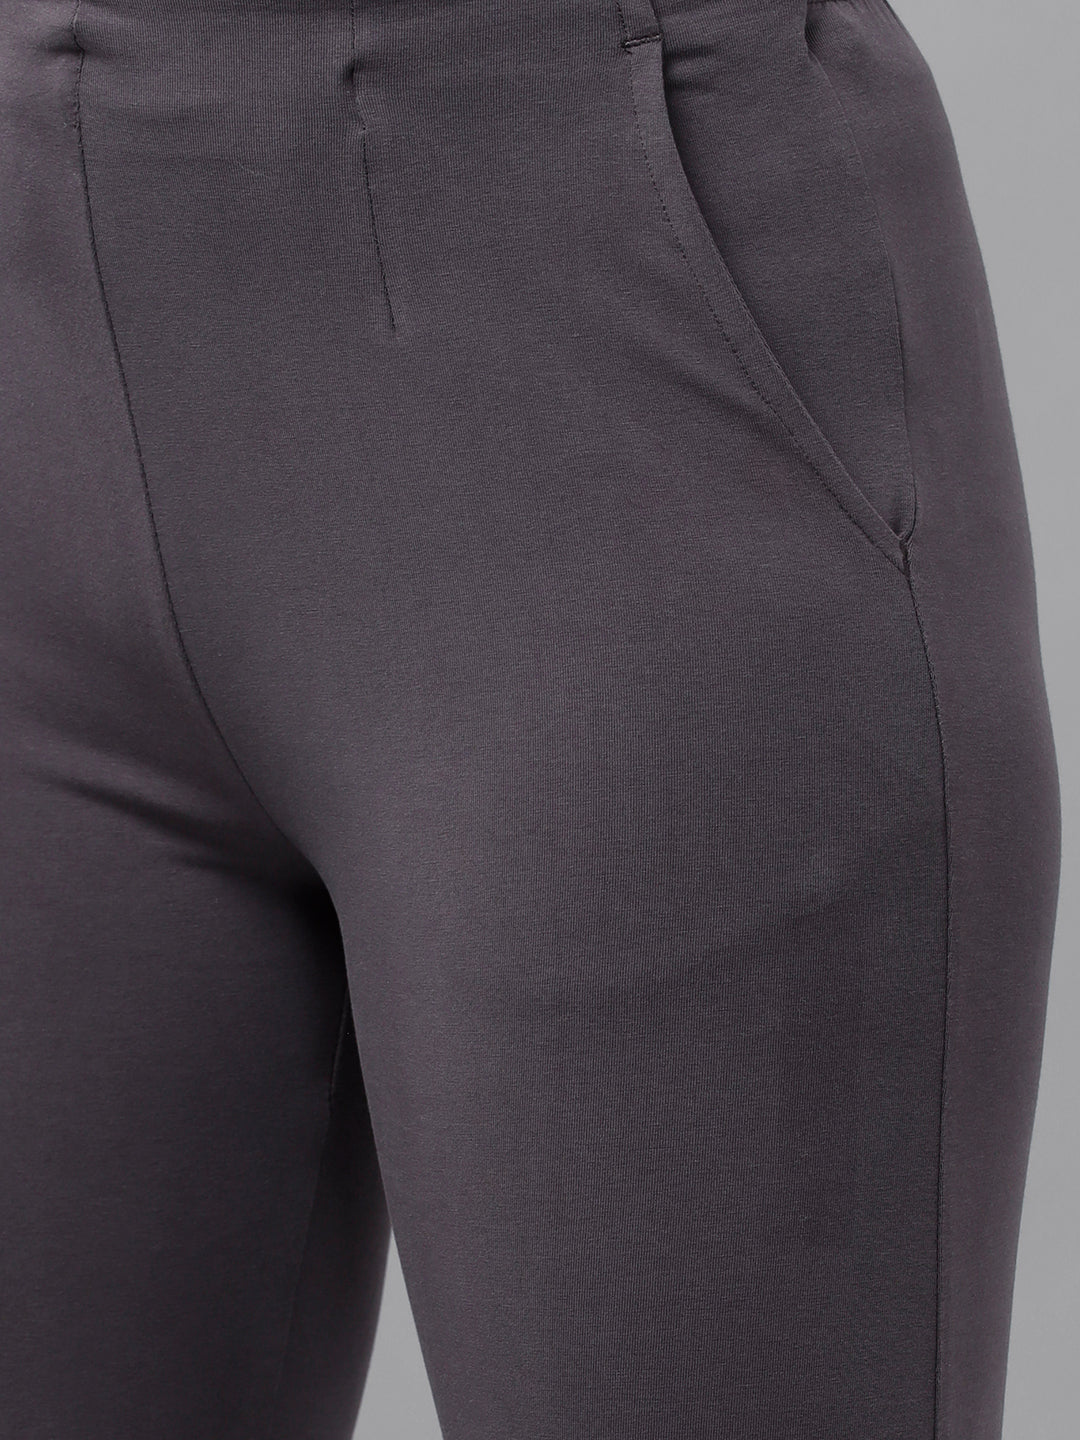 Ladies Grey Black Skinny Pants Women| Alibaba.com